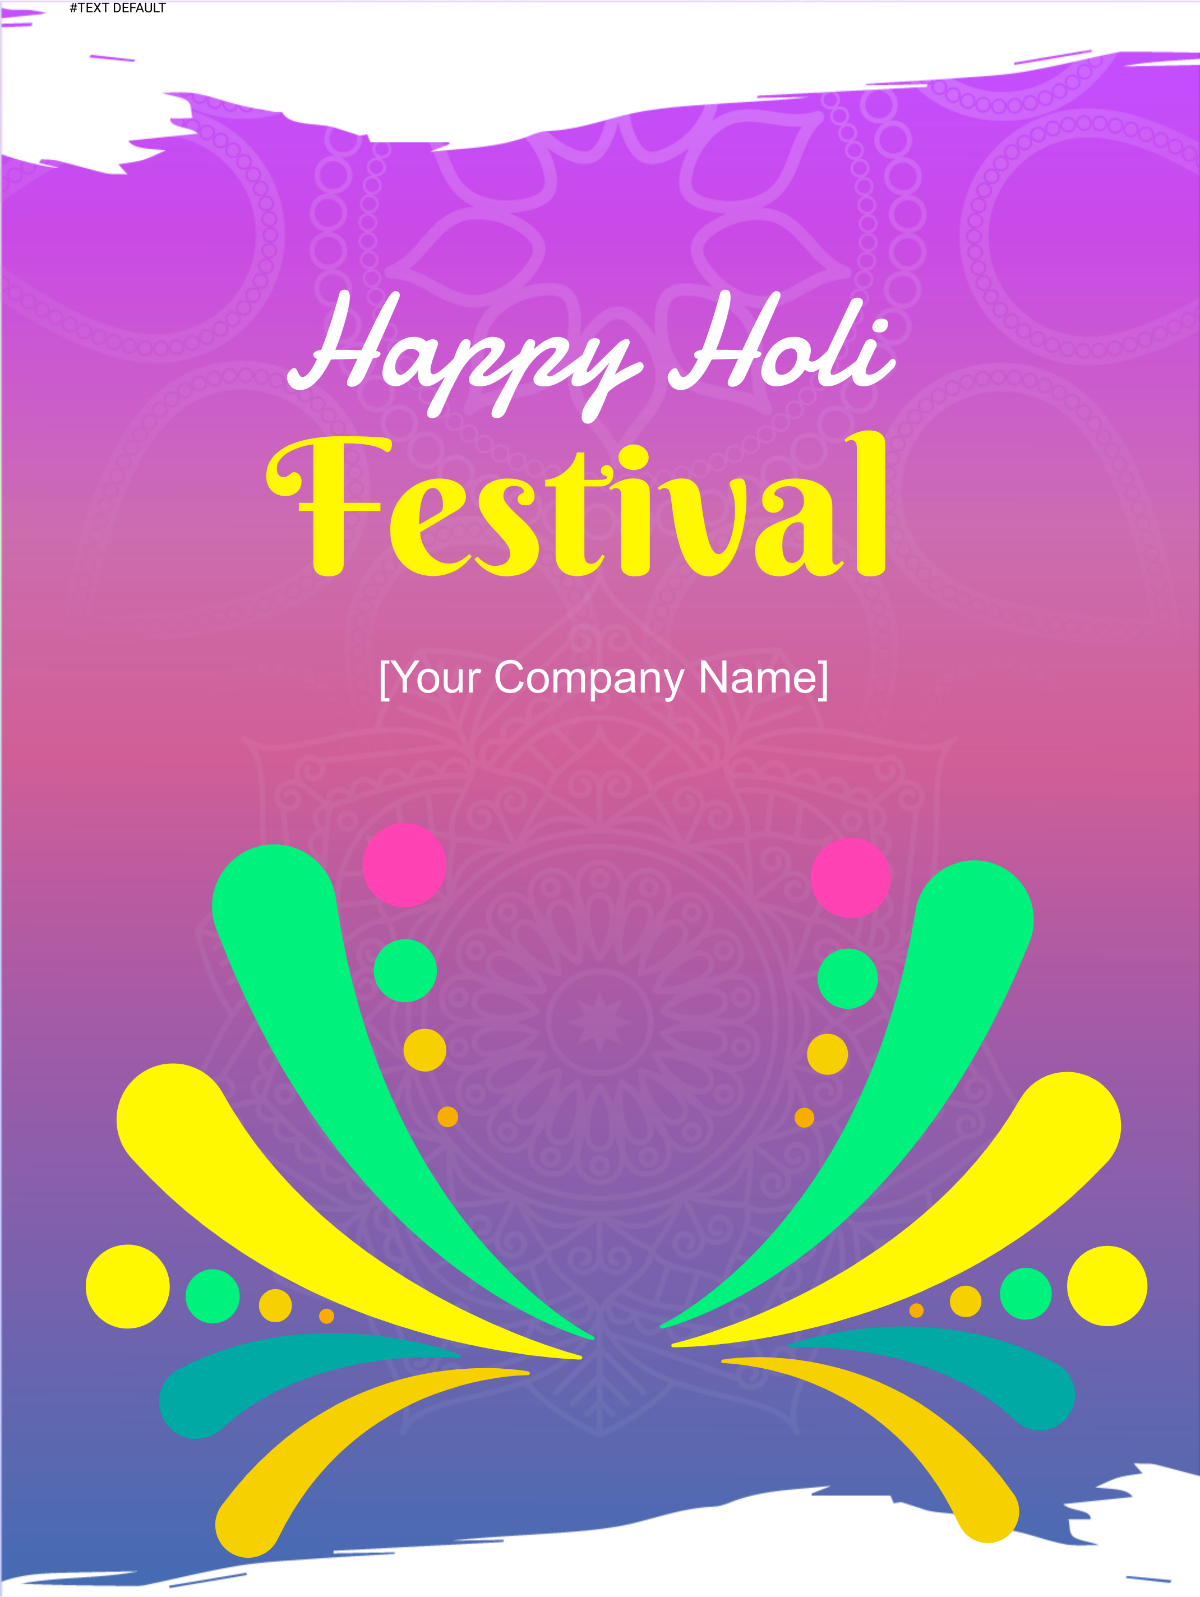 Happy Holi Festival Threads Post Template